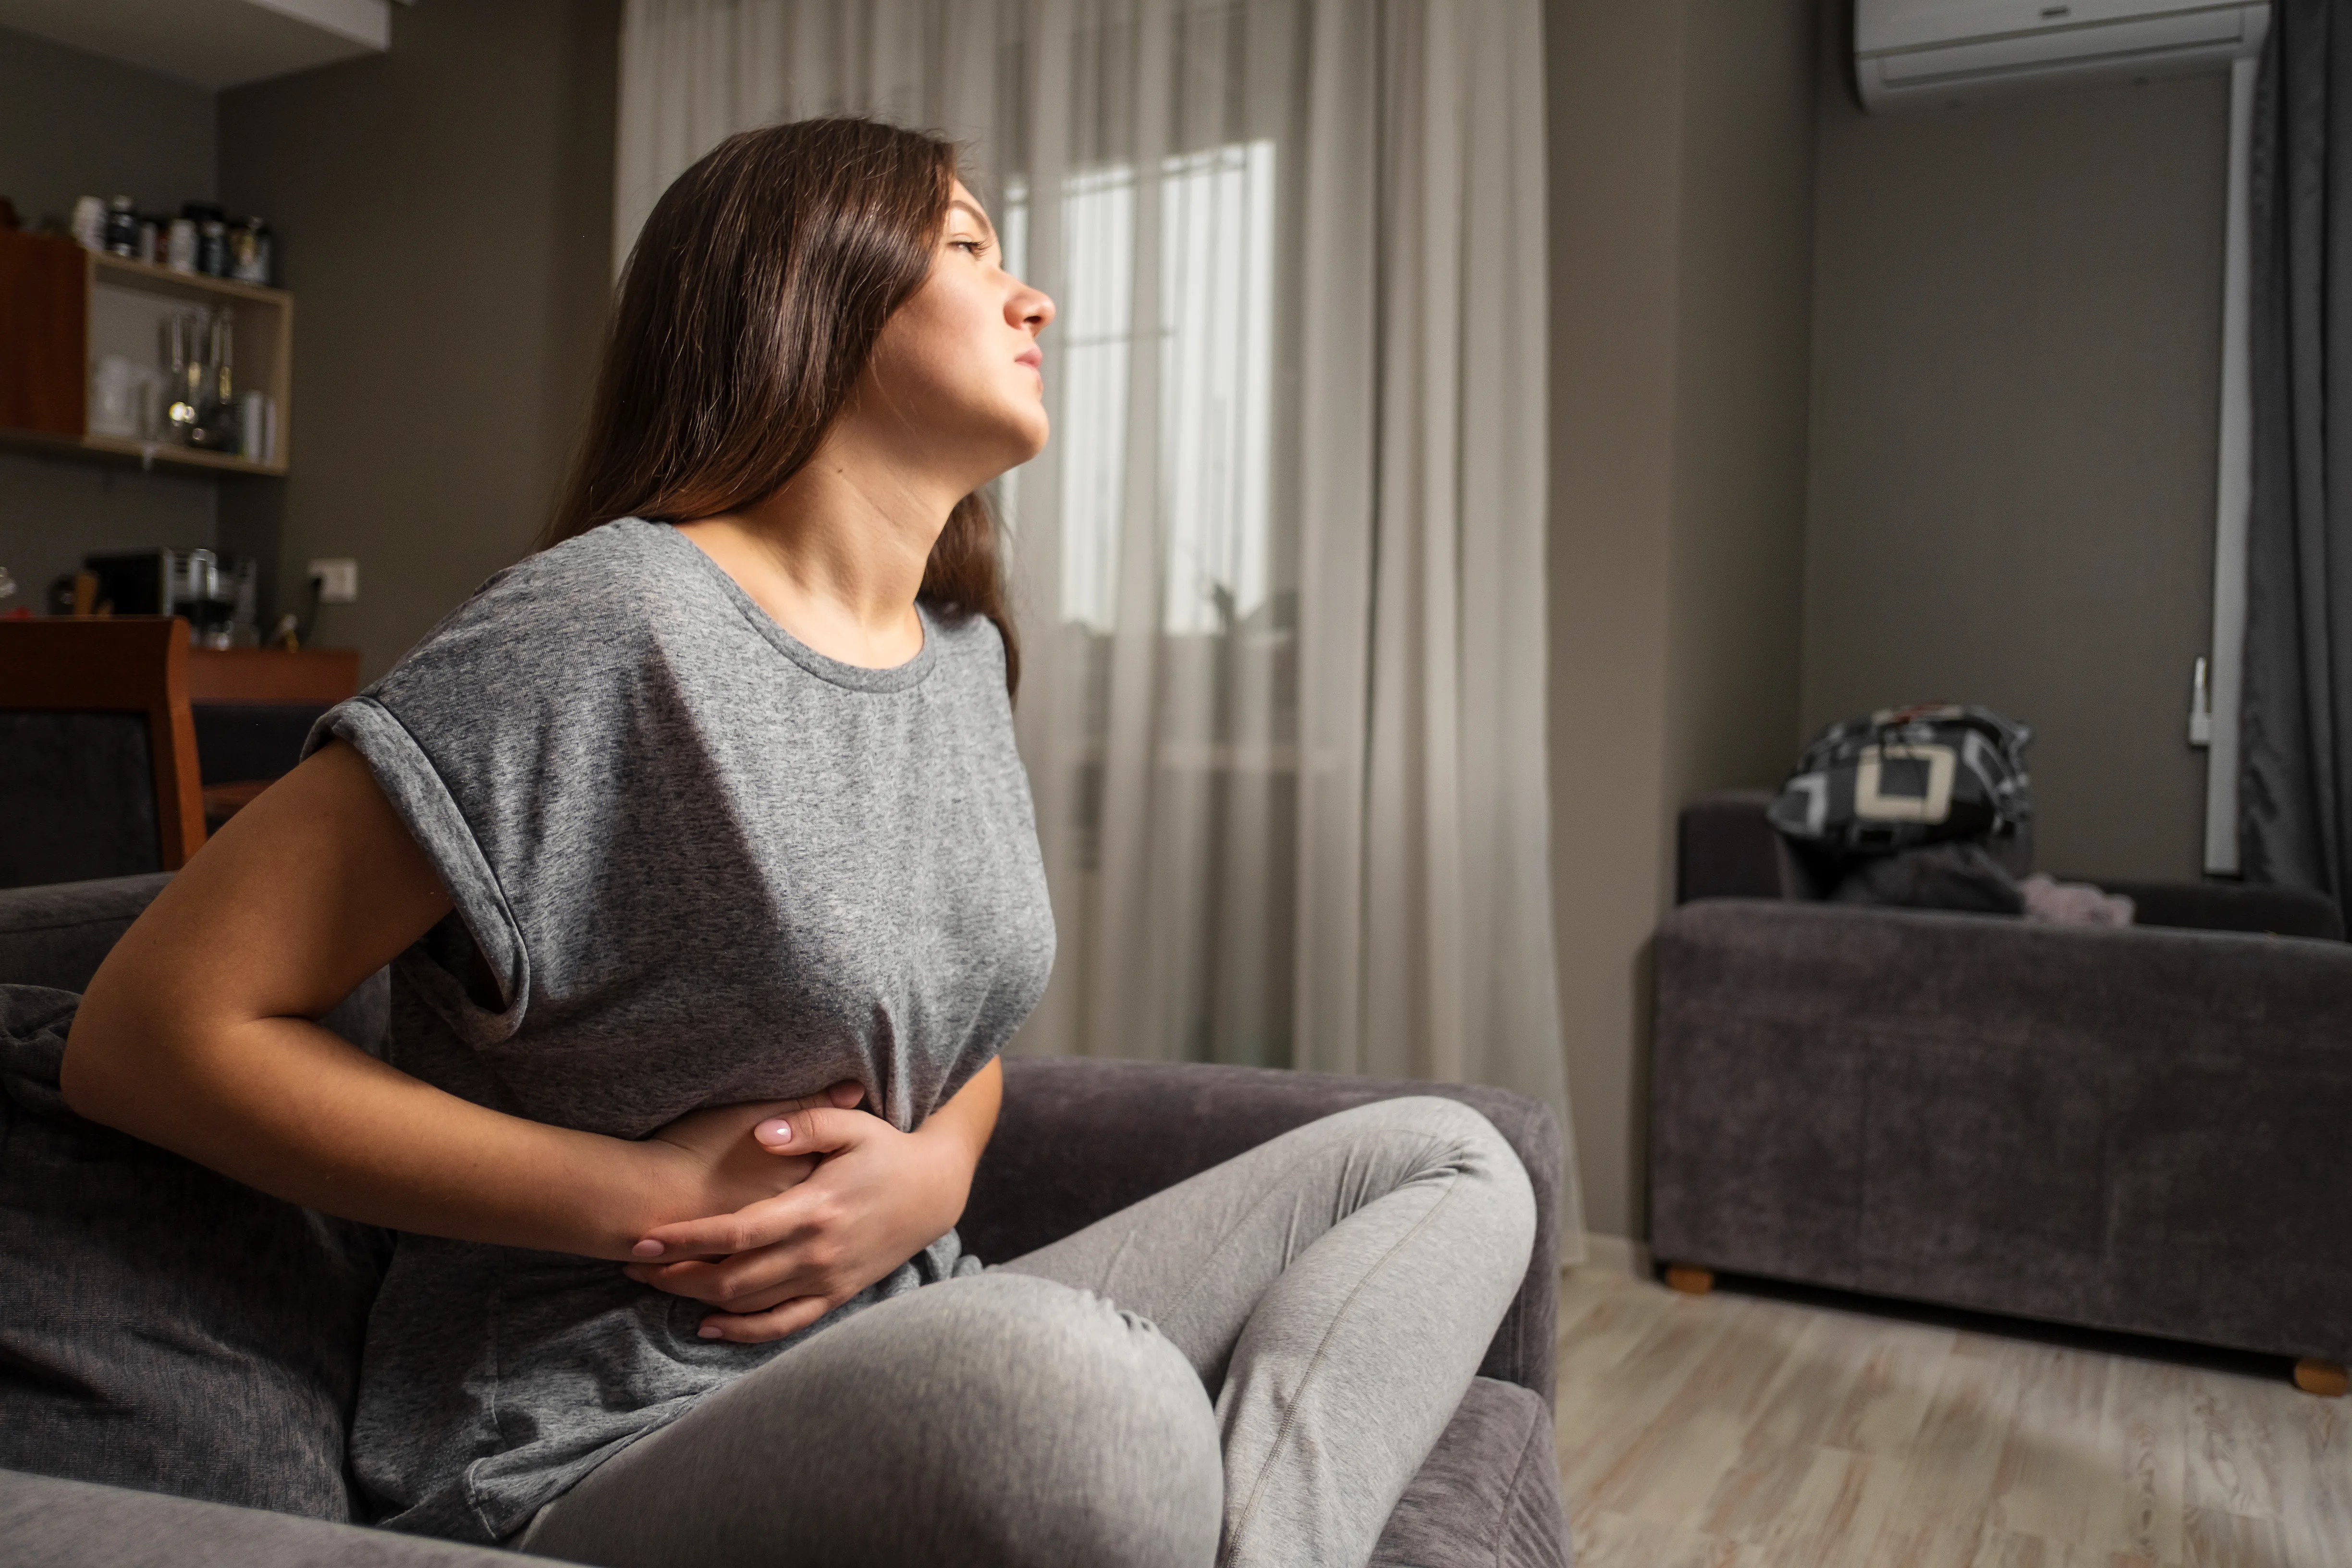 7 Symptoms You May Have a Gallbladder Problem